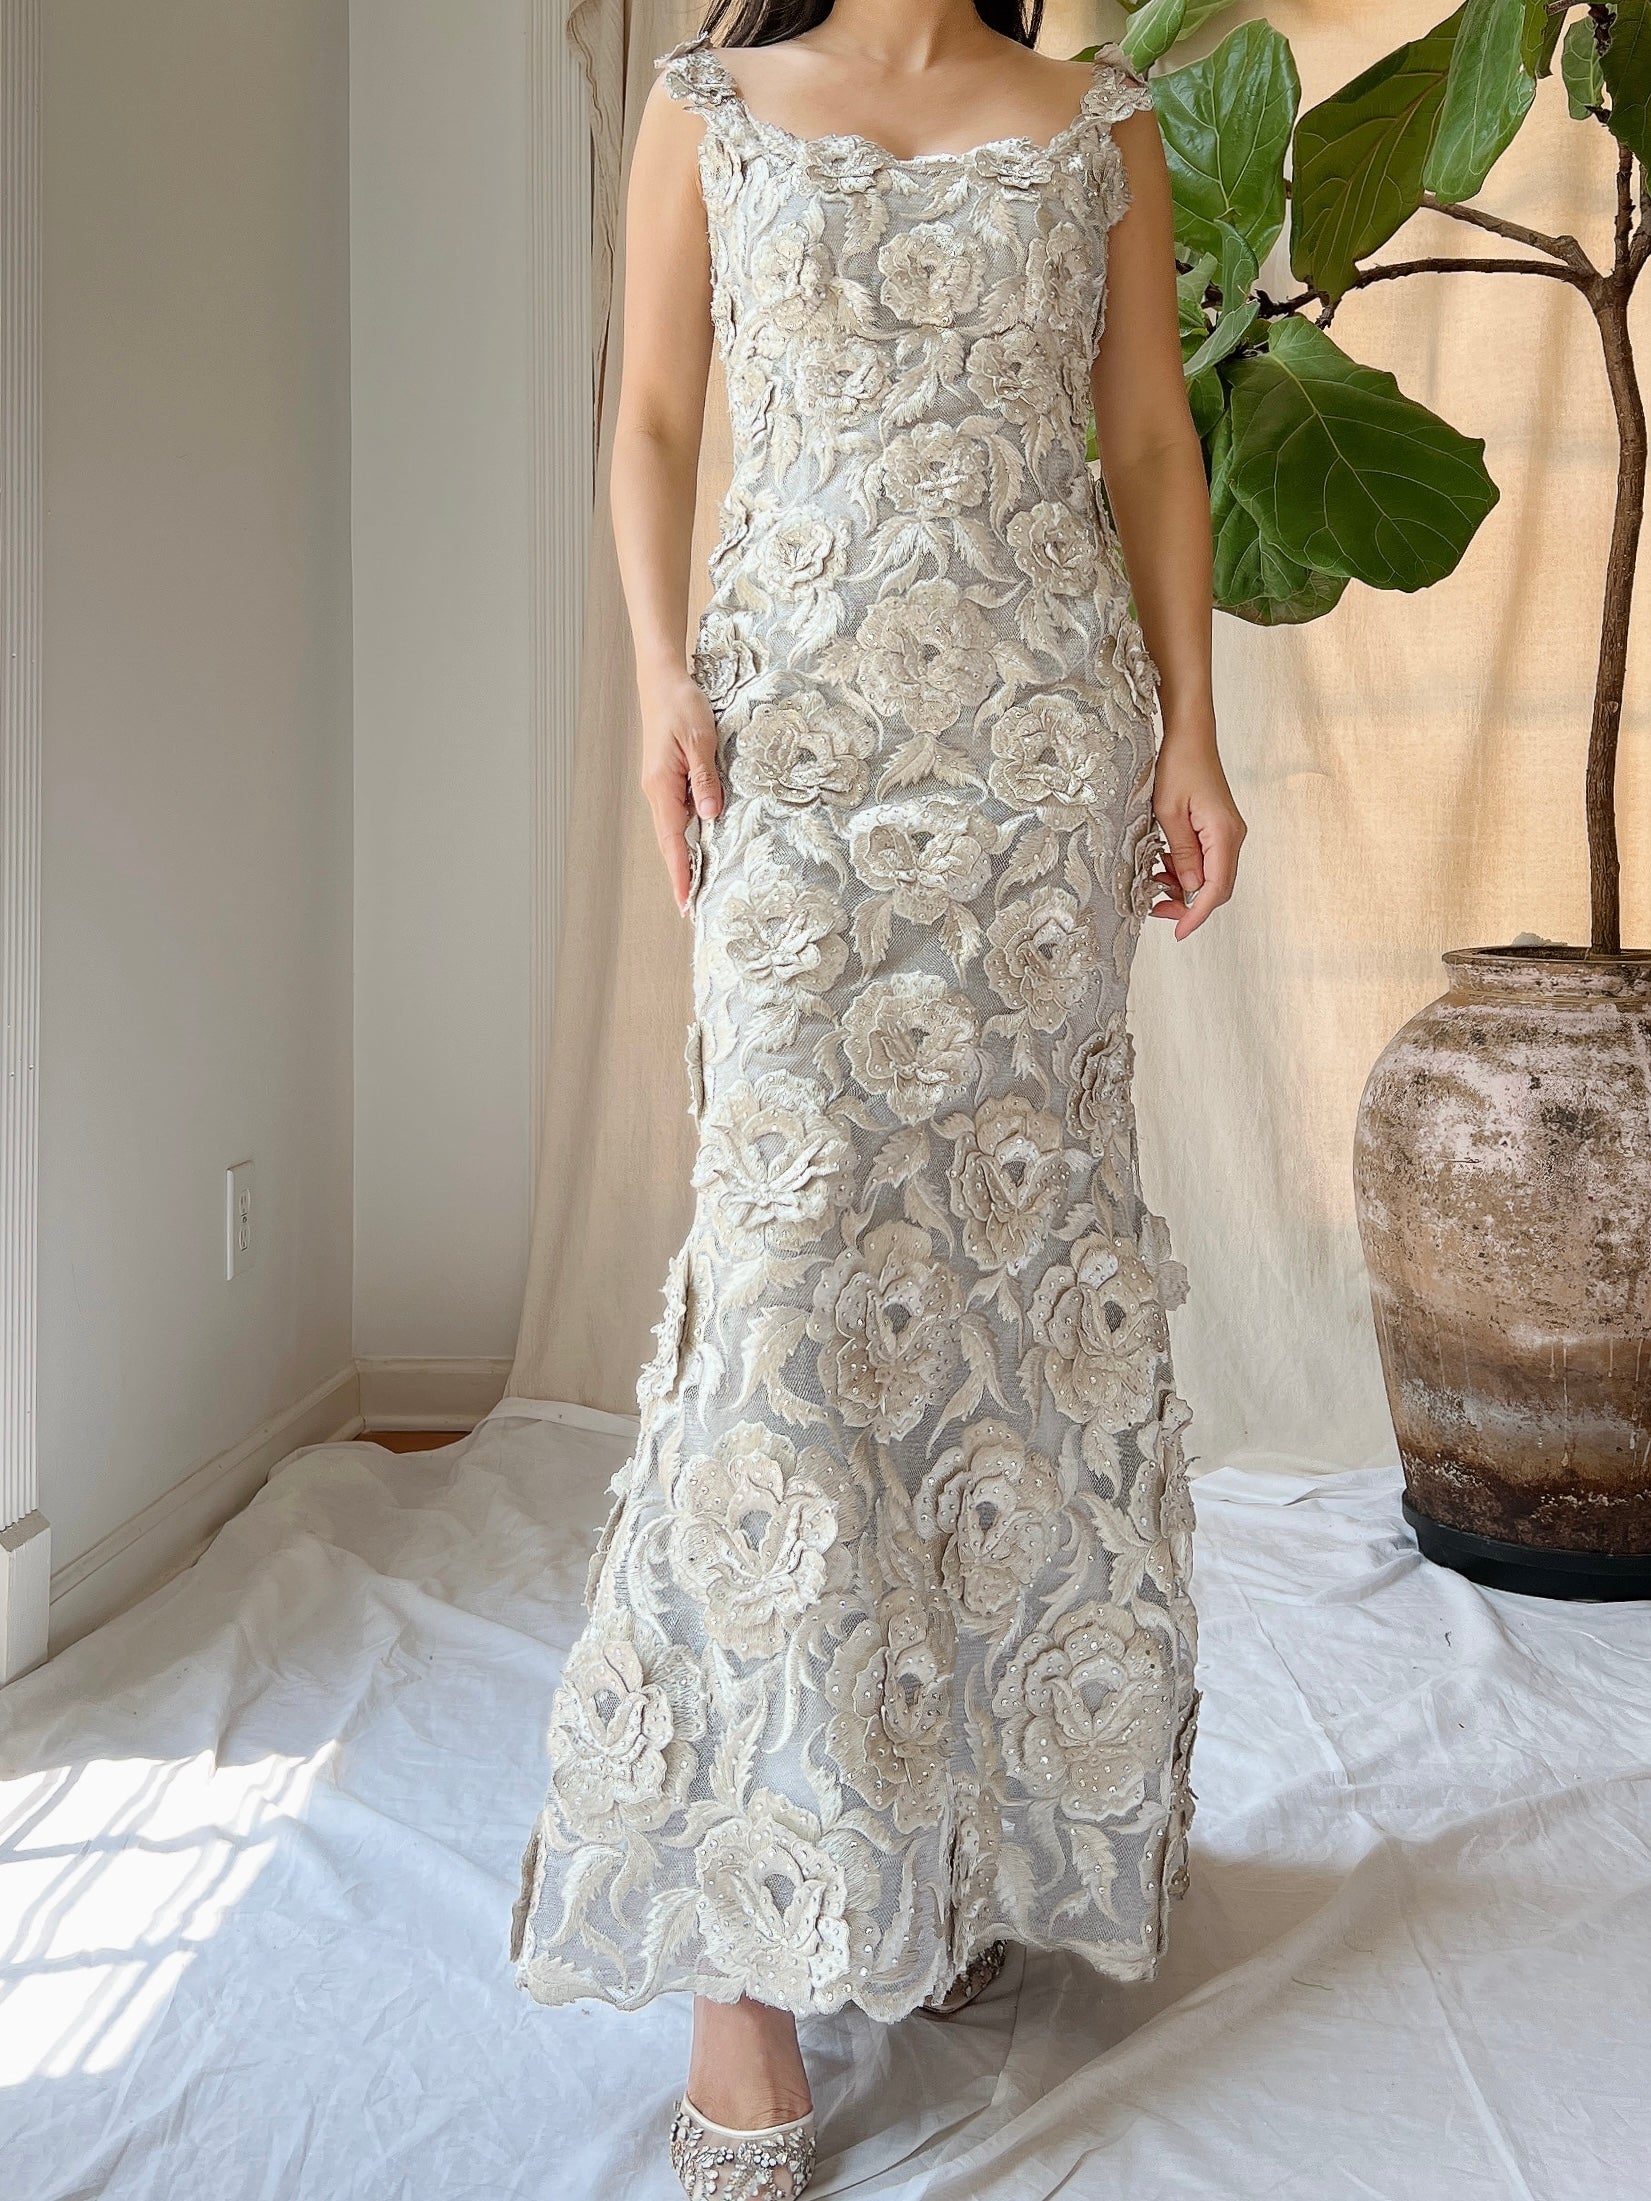 Fe Zandi Couture 3D Rose Gown - S/4